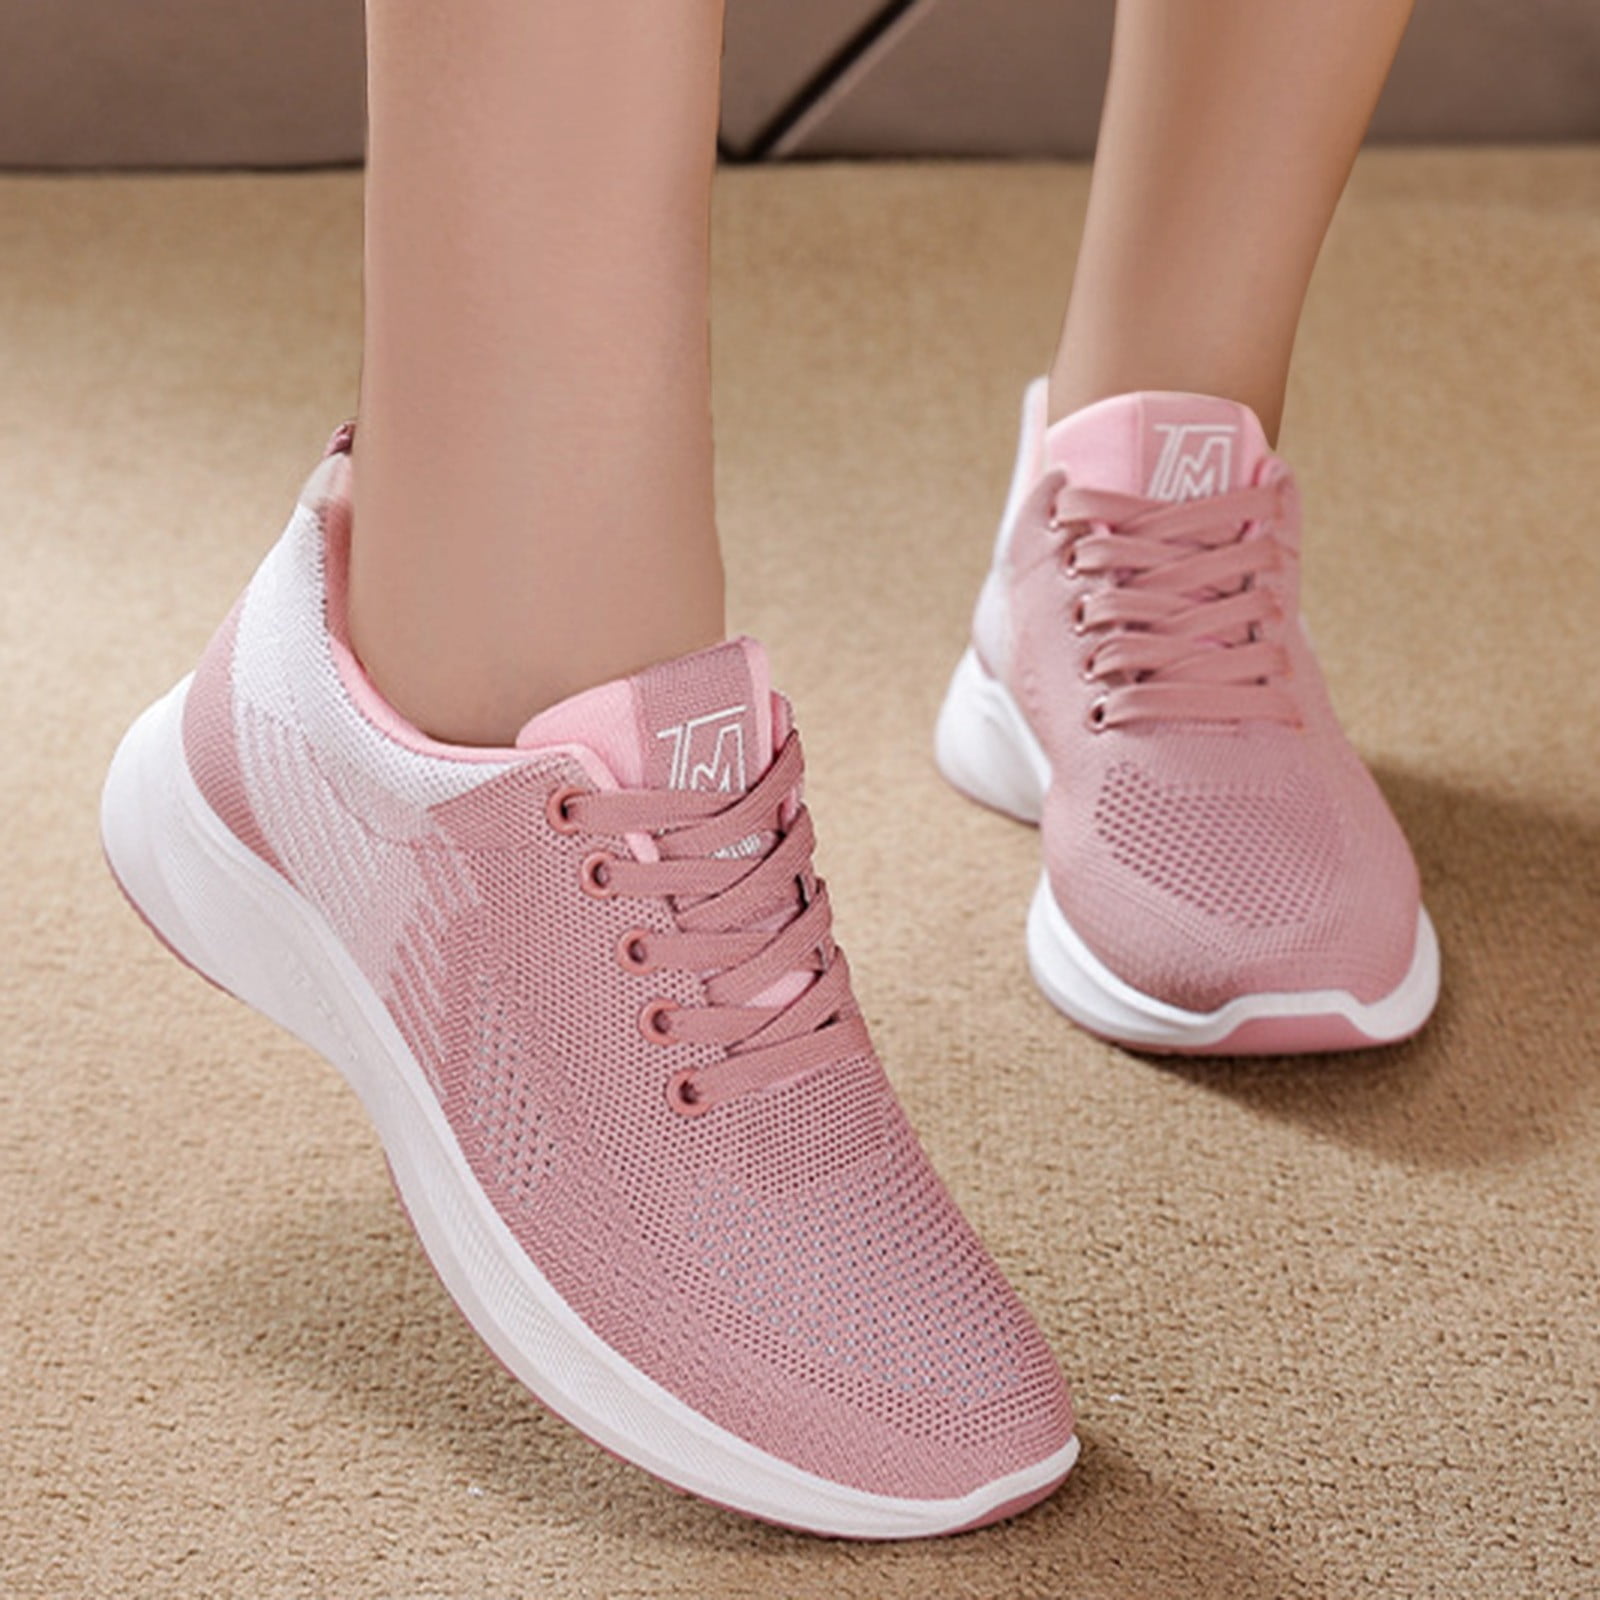 KaLI_store Dress Shoes for Women Womens Walking Shoes Non-Slip Tennis  Sneakers Running Shoes Pink,8 